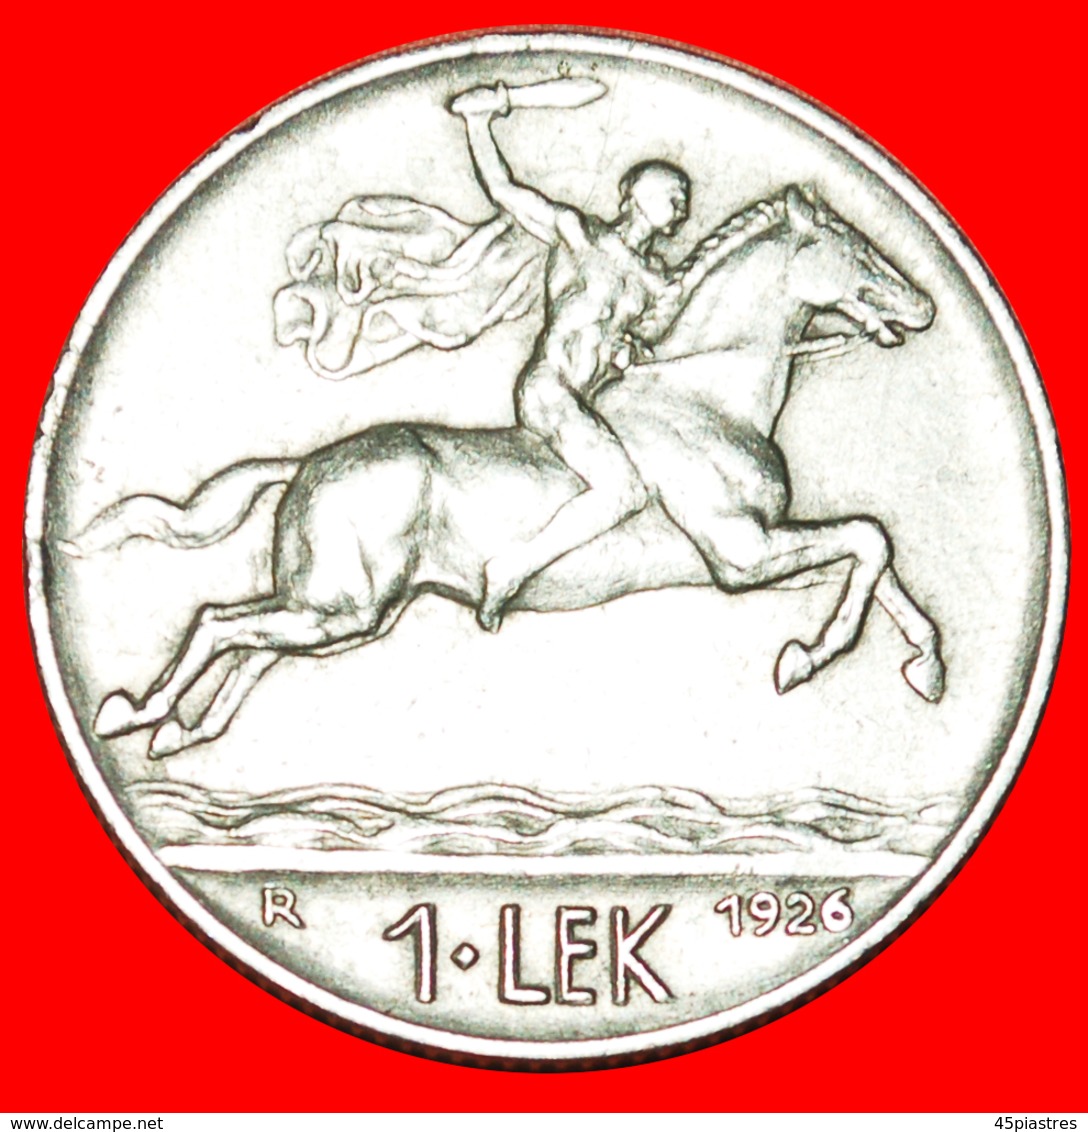 + ITALY: ALBANIA  1 LEK 1926R! ALEXANDER THE GREAT (336-323 BCE)! LOW START  NO RESERVE! - Albanië